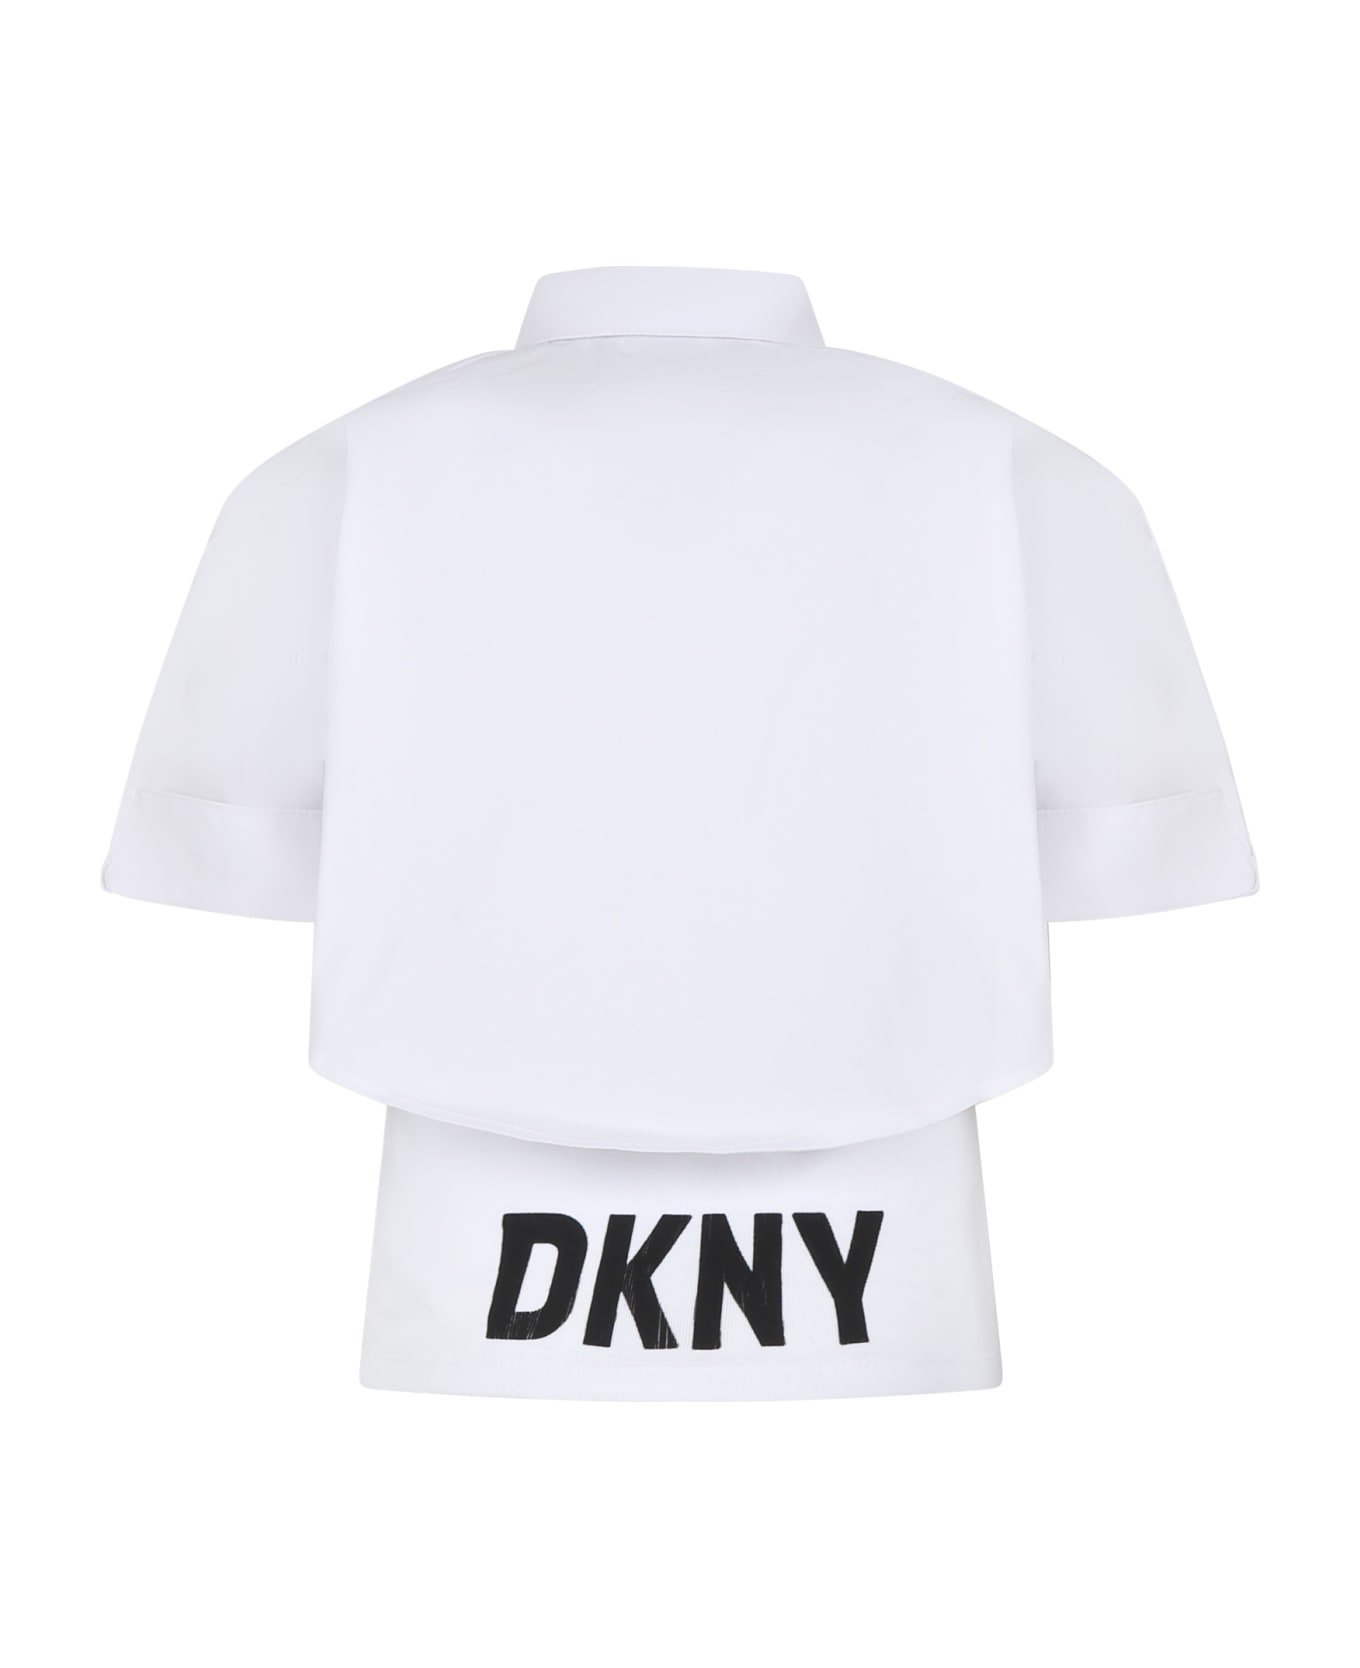 DKNY White Cotton Shirt For Girl - White